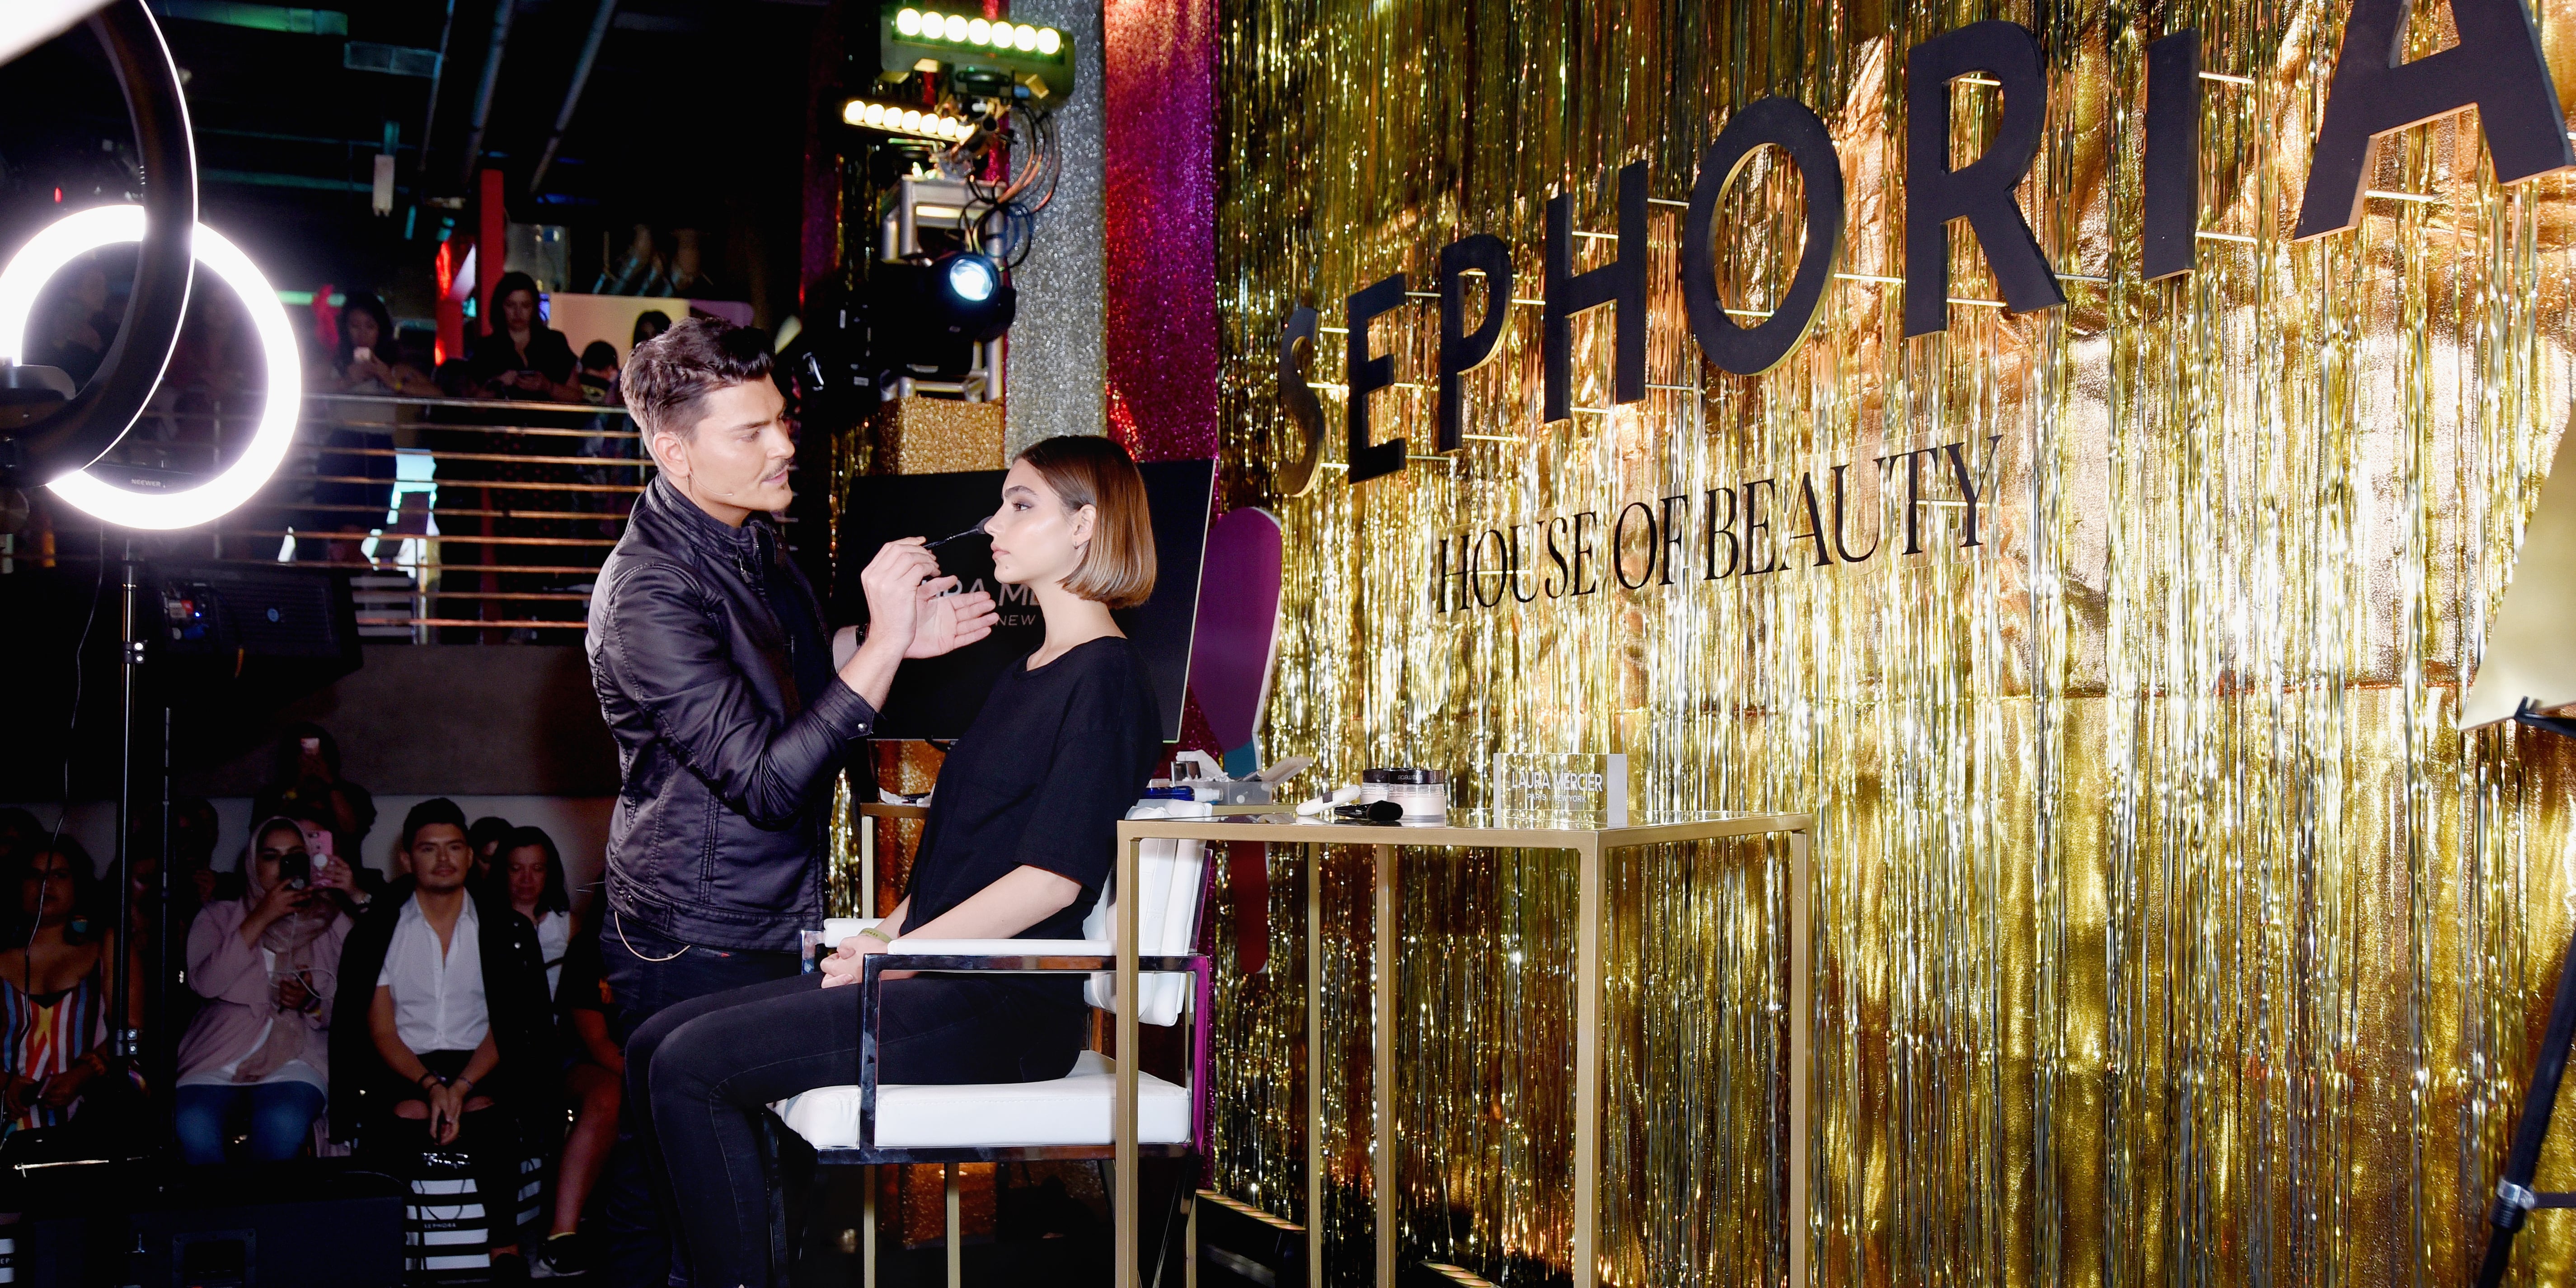 Sephora Takes New York; What to Expect from Sephora's Paris